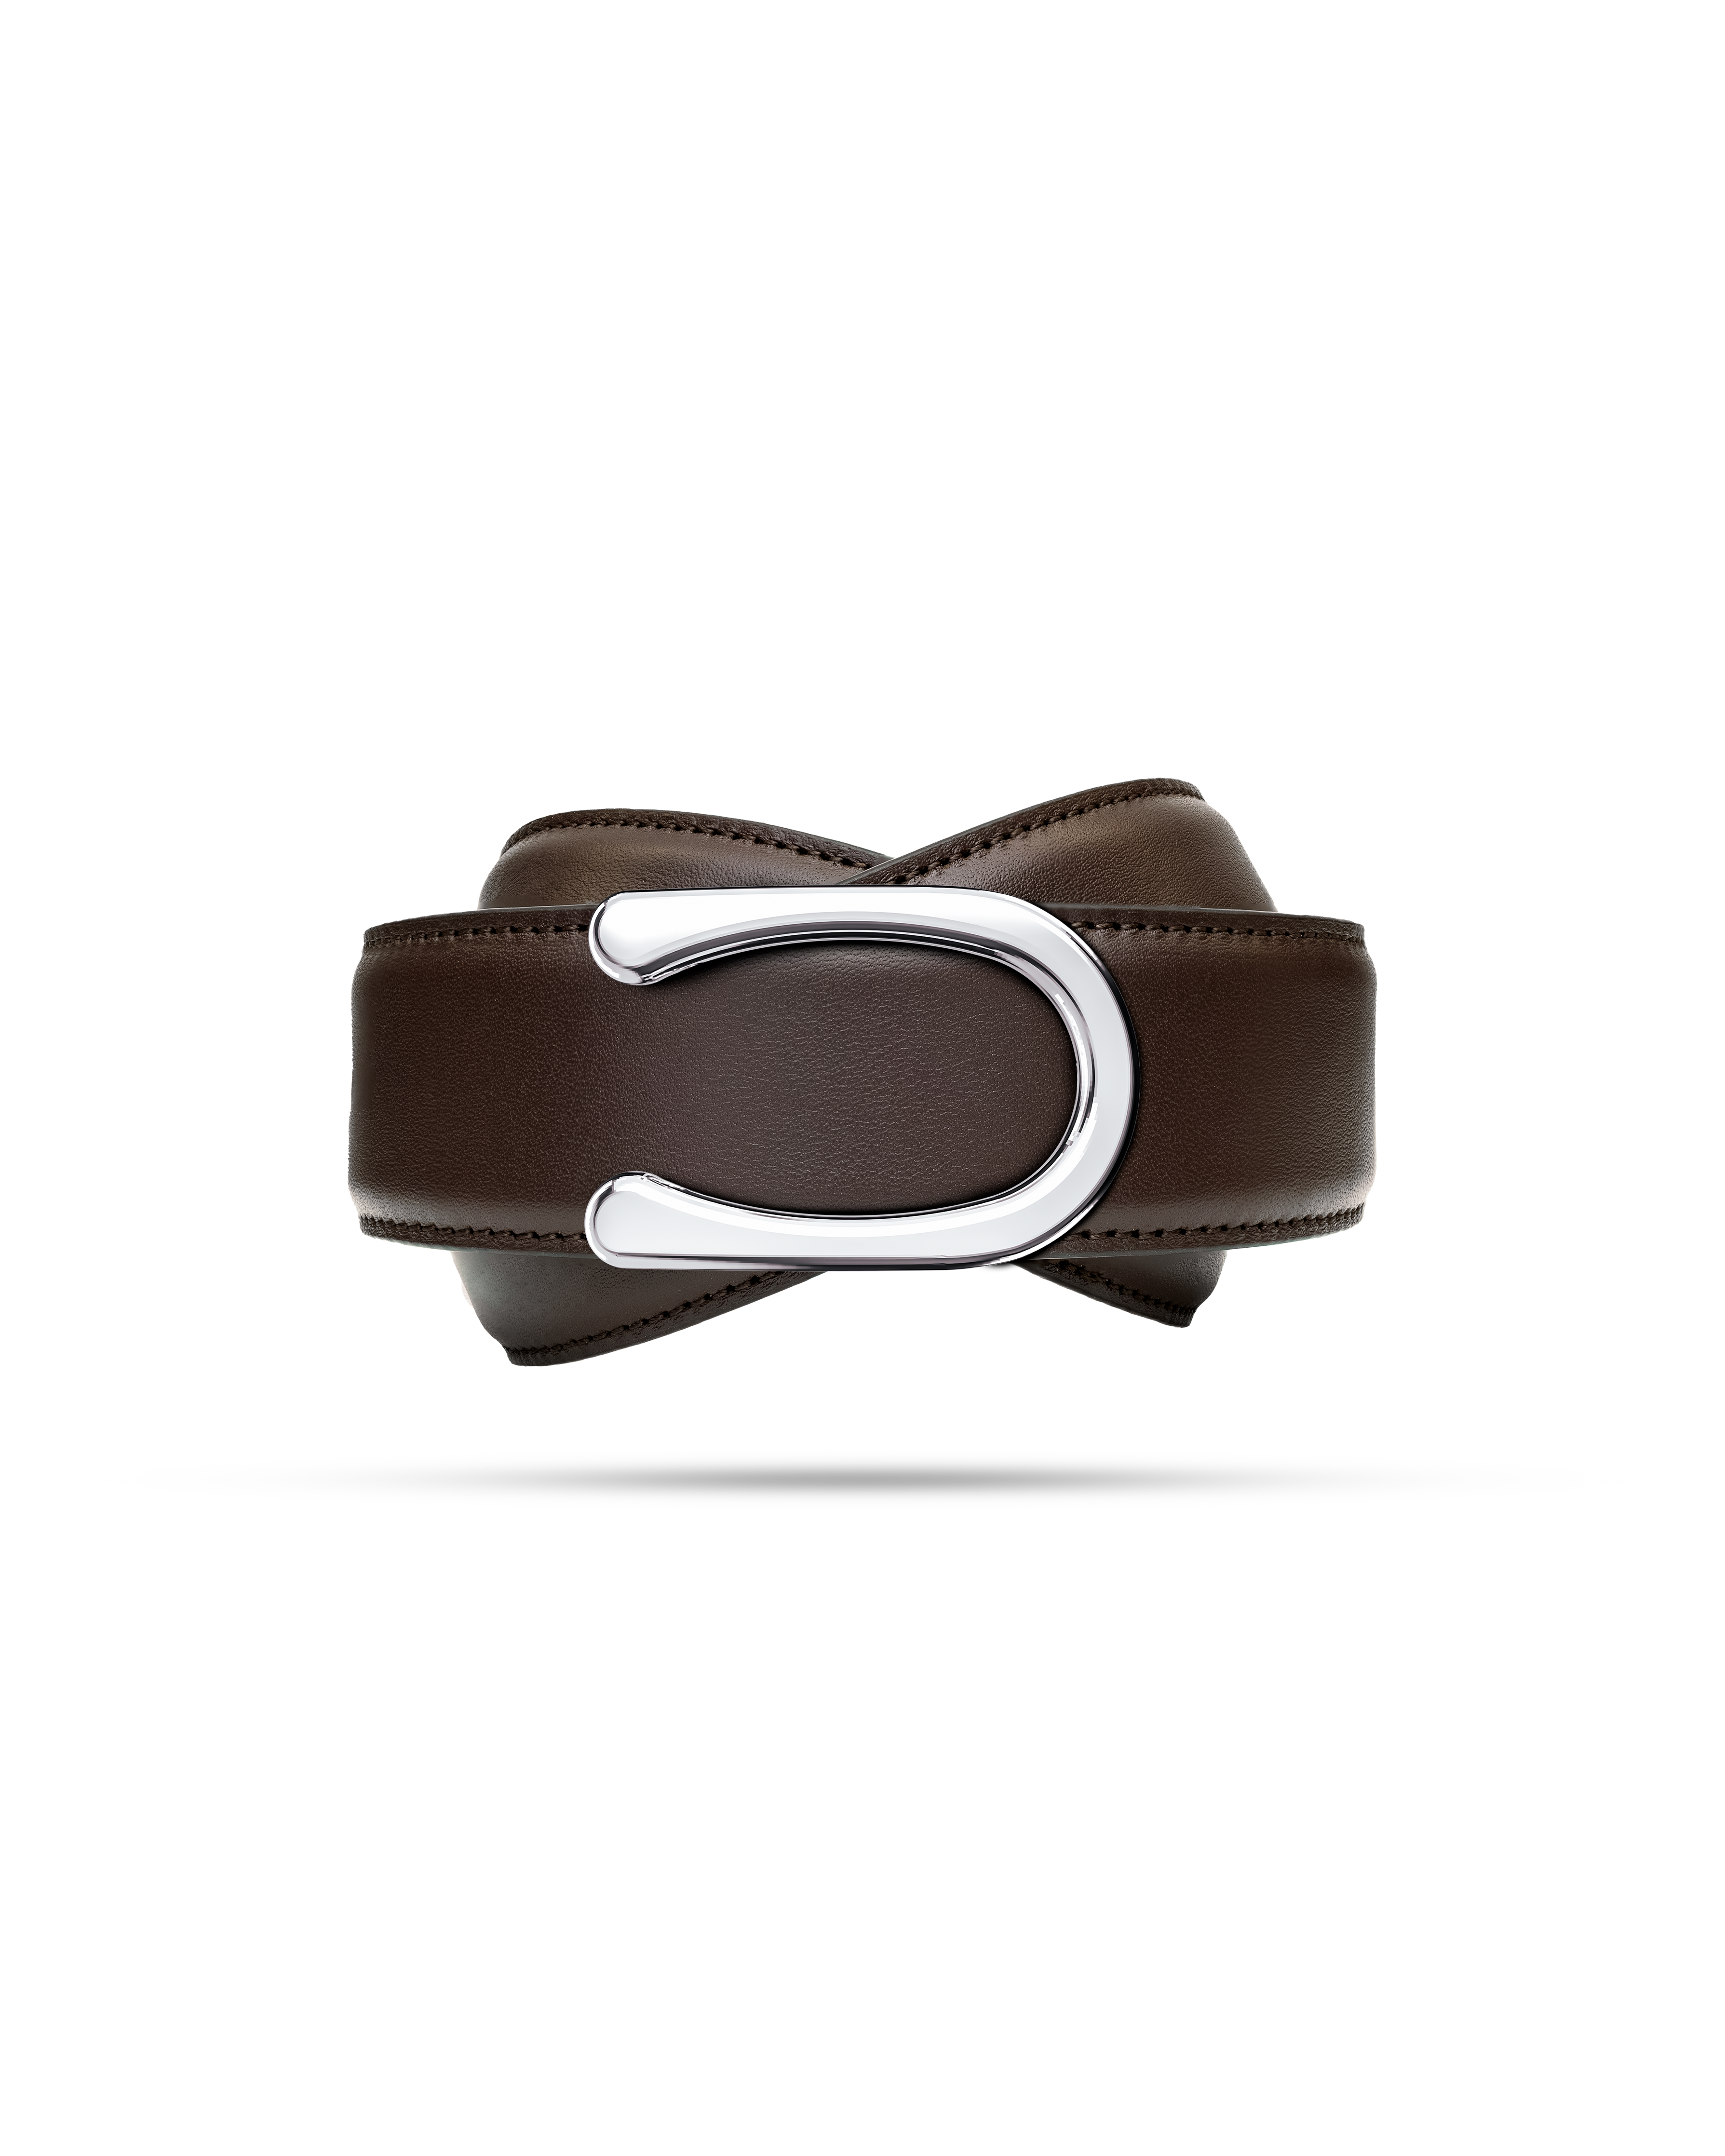 Model II Palladium  —  Calfskin Chocolate Brown